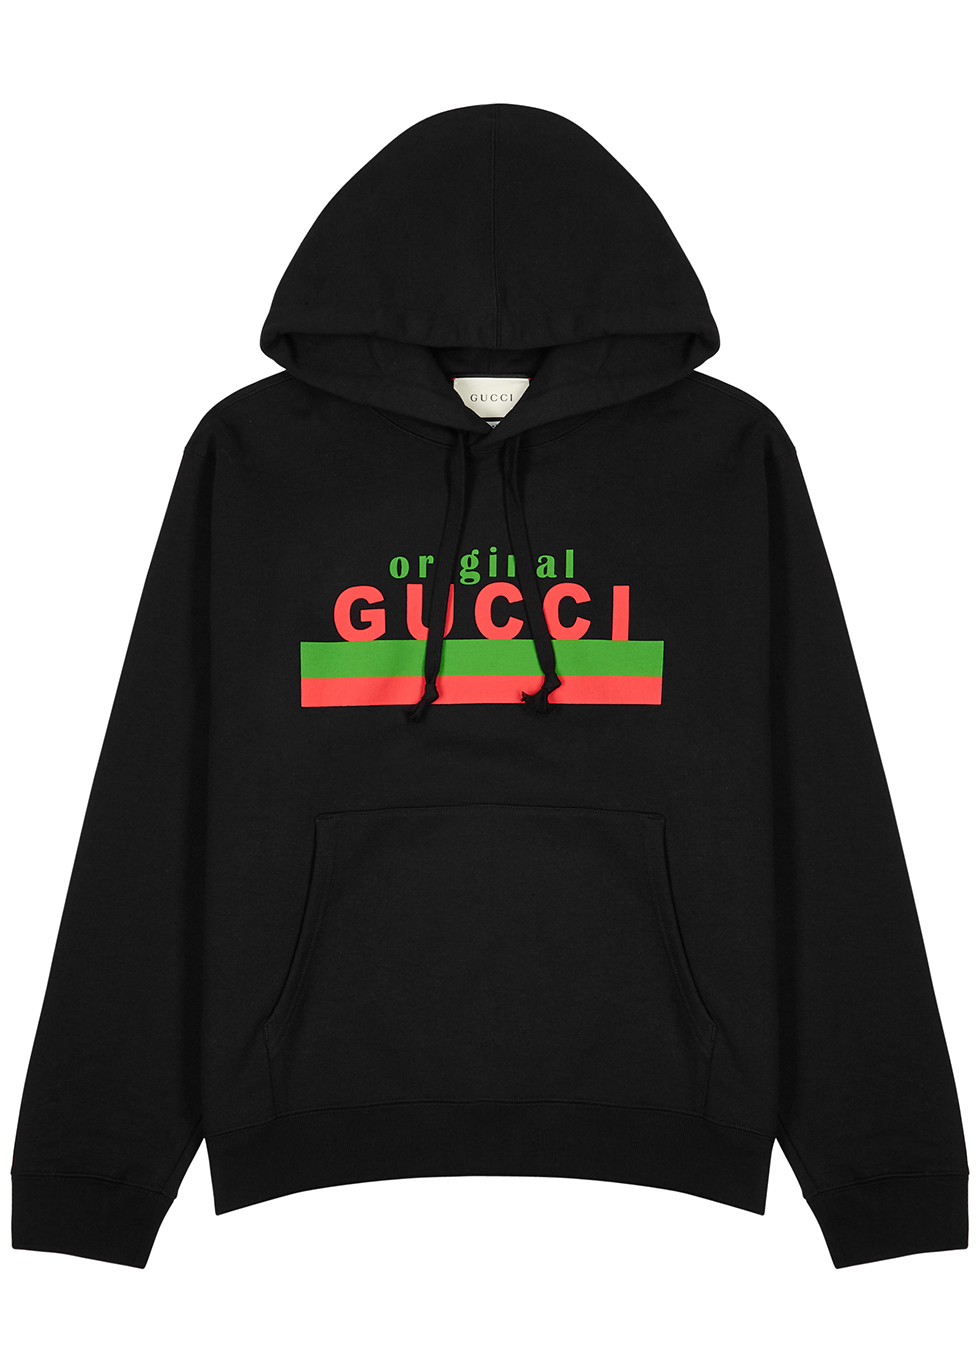 Gucci Original Gucci black hooded 